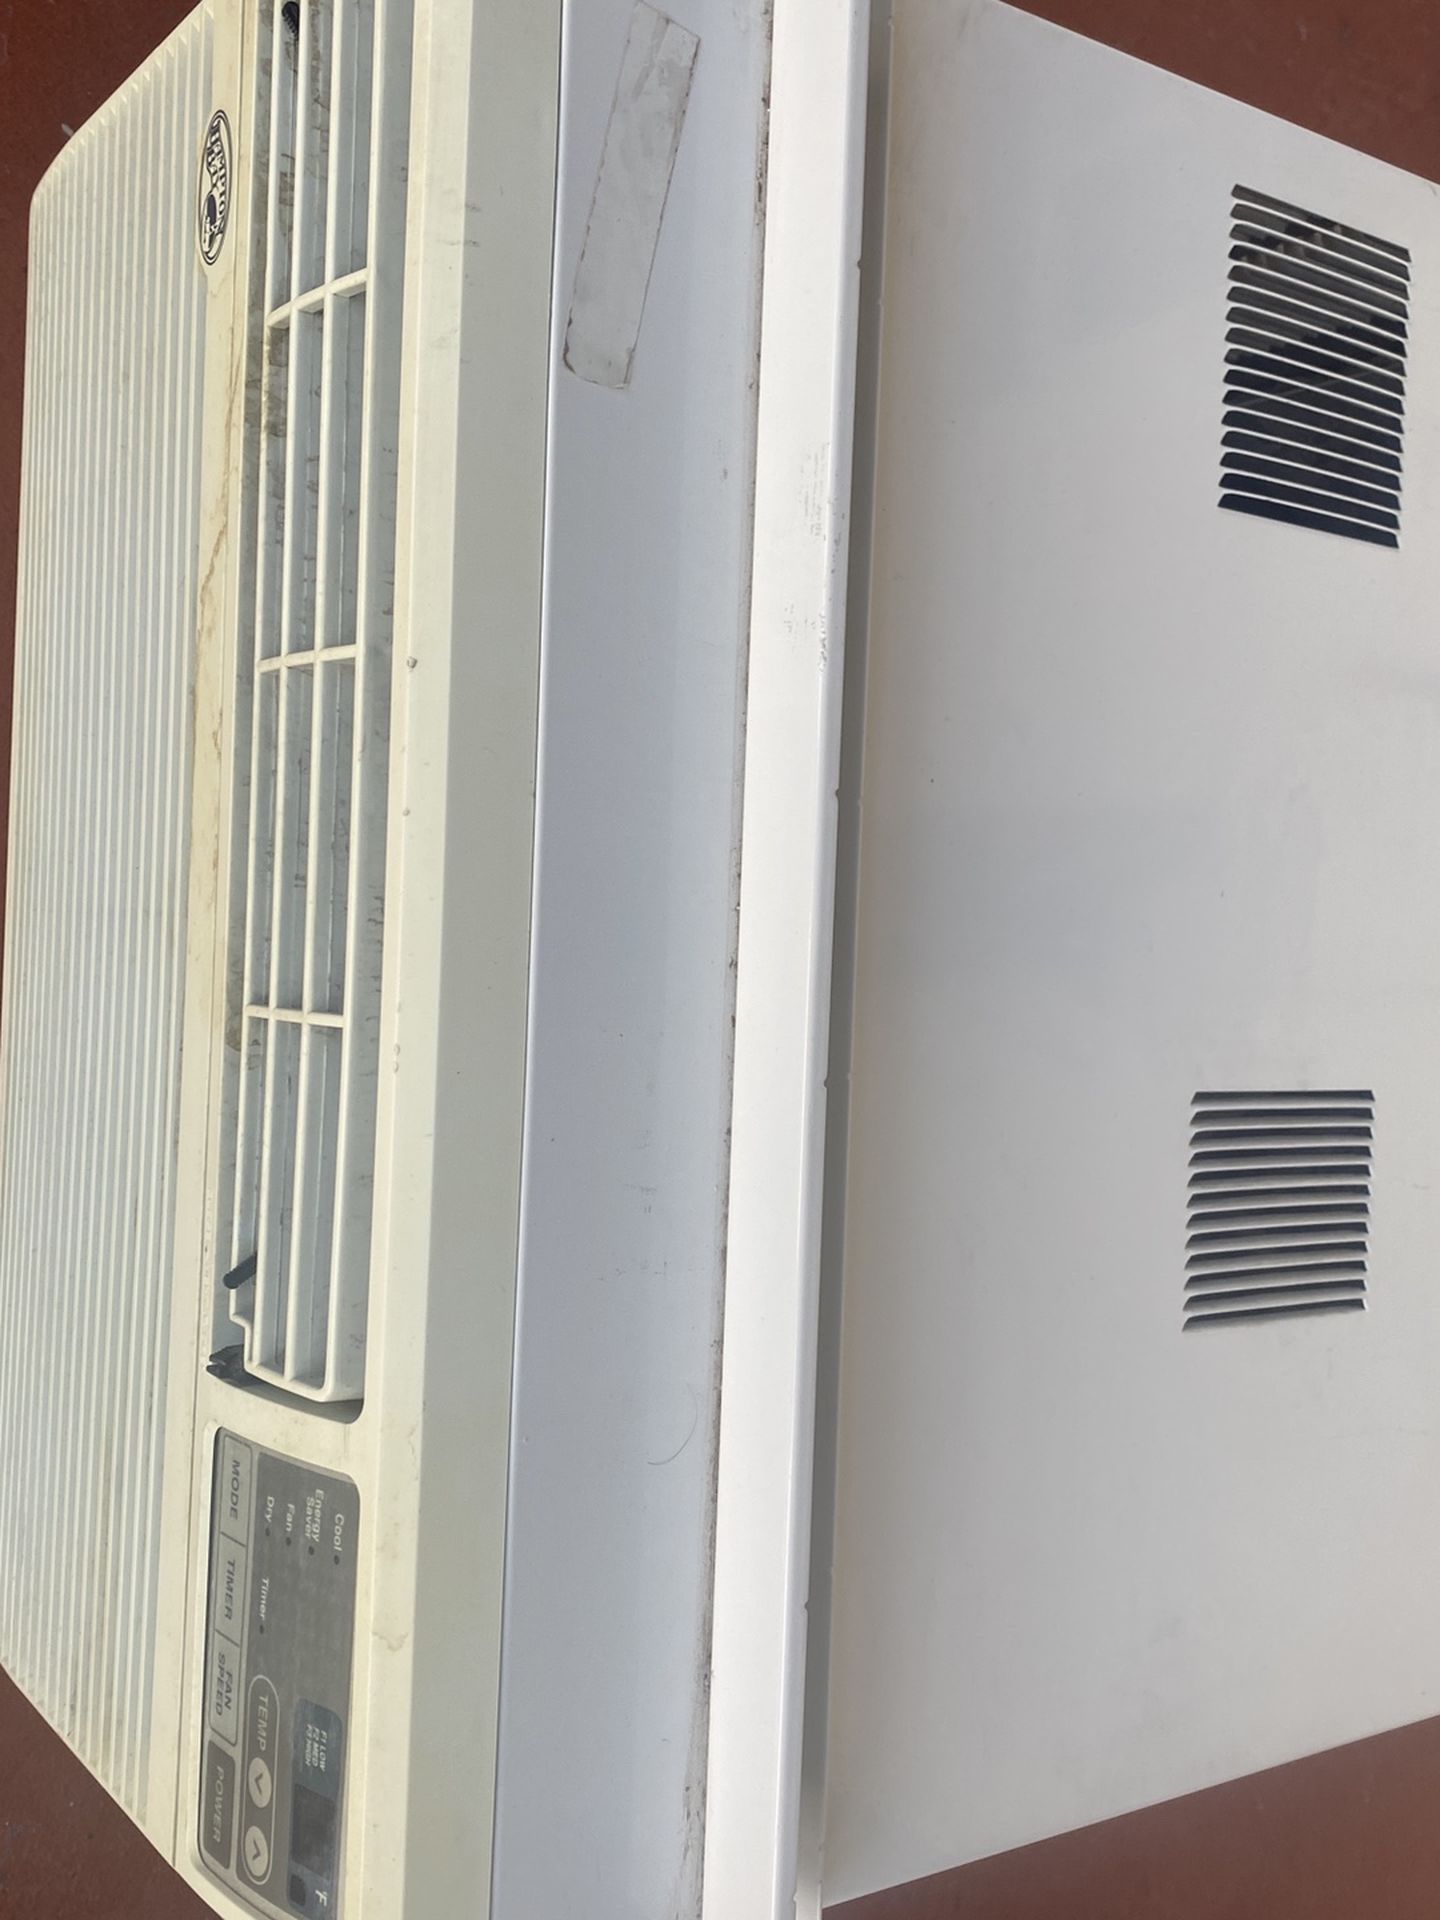 Hampton Bay HBLG1004R Air Conditioner Ac Unit